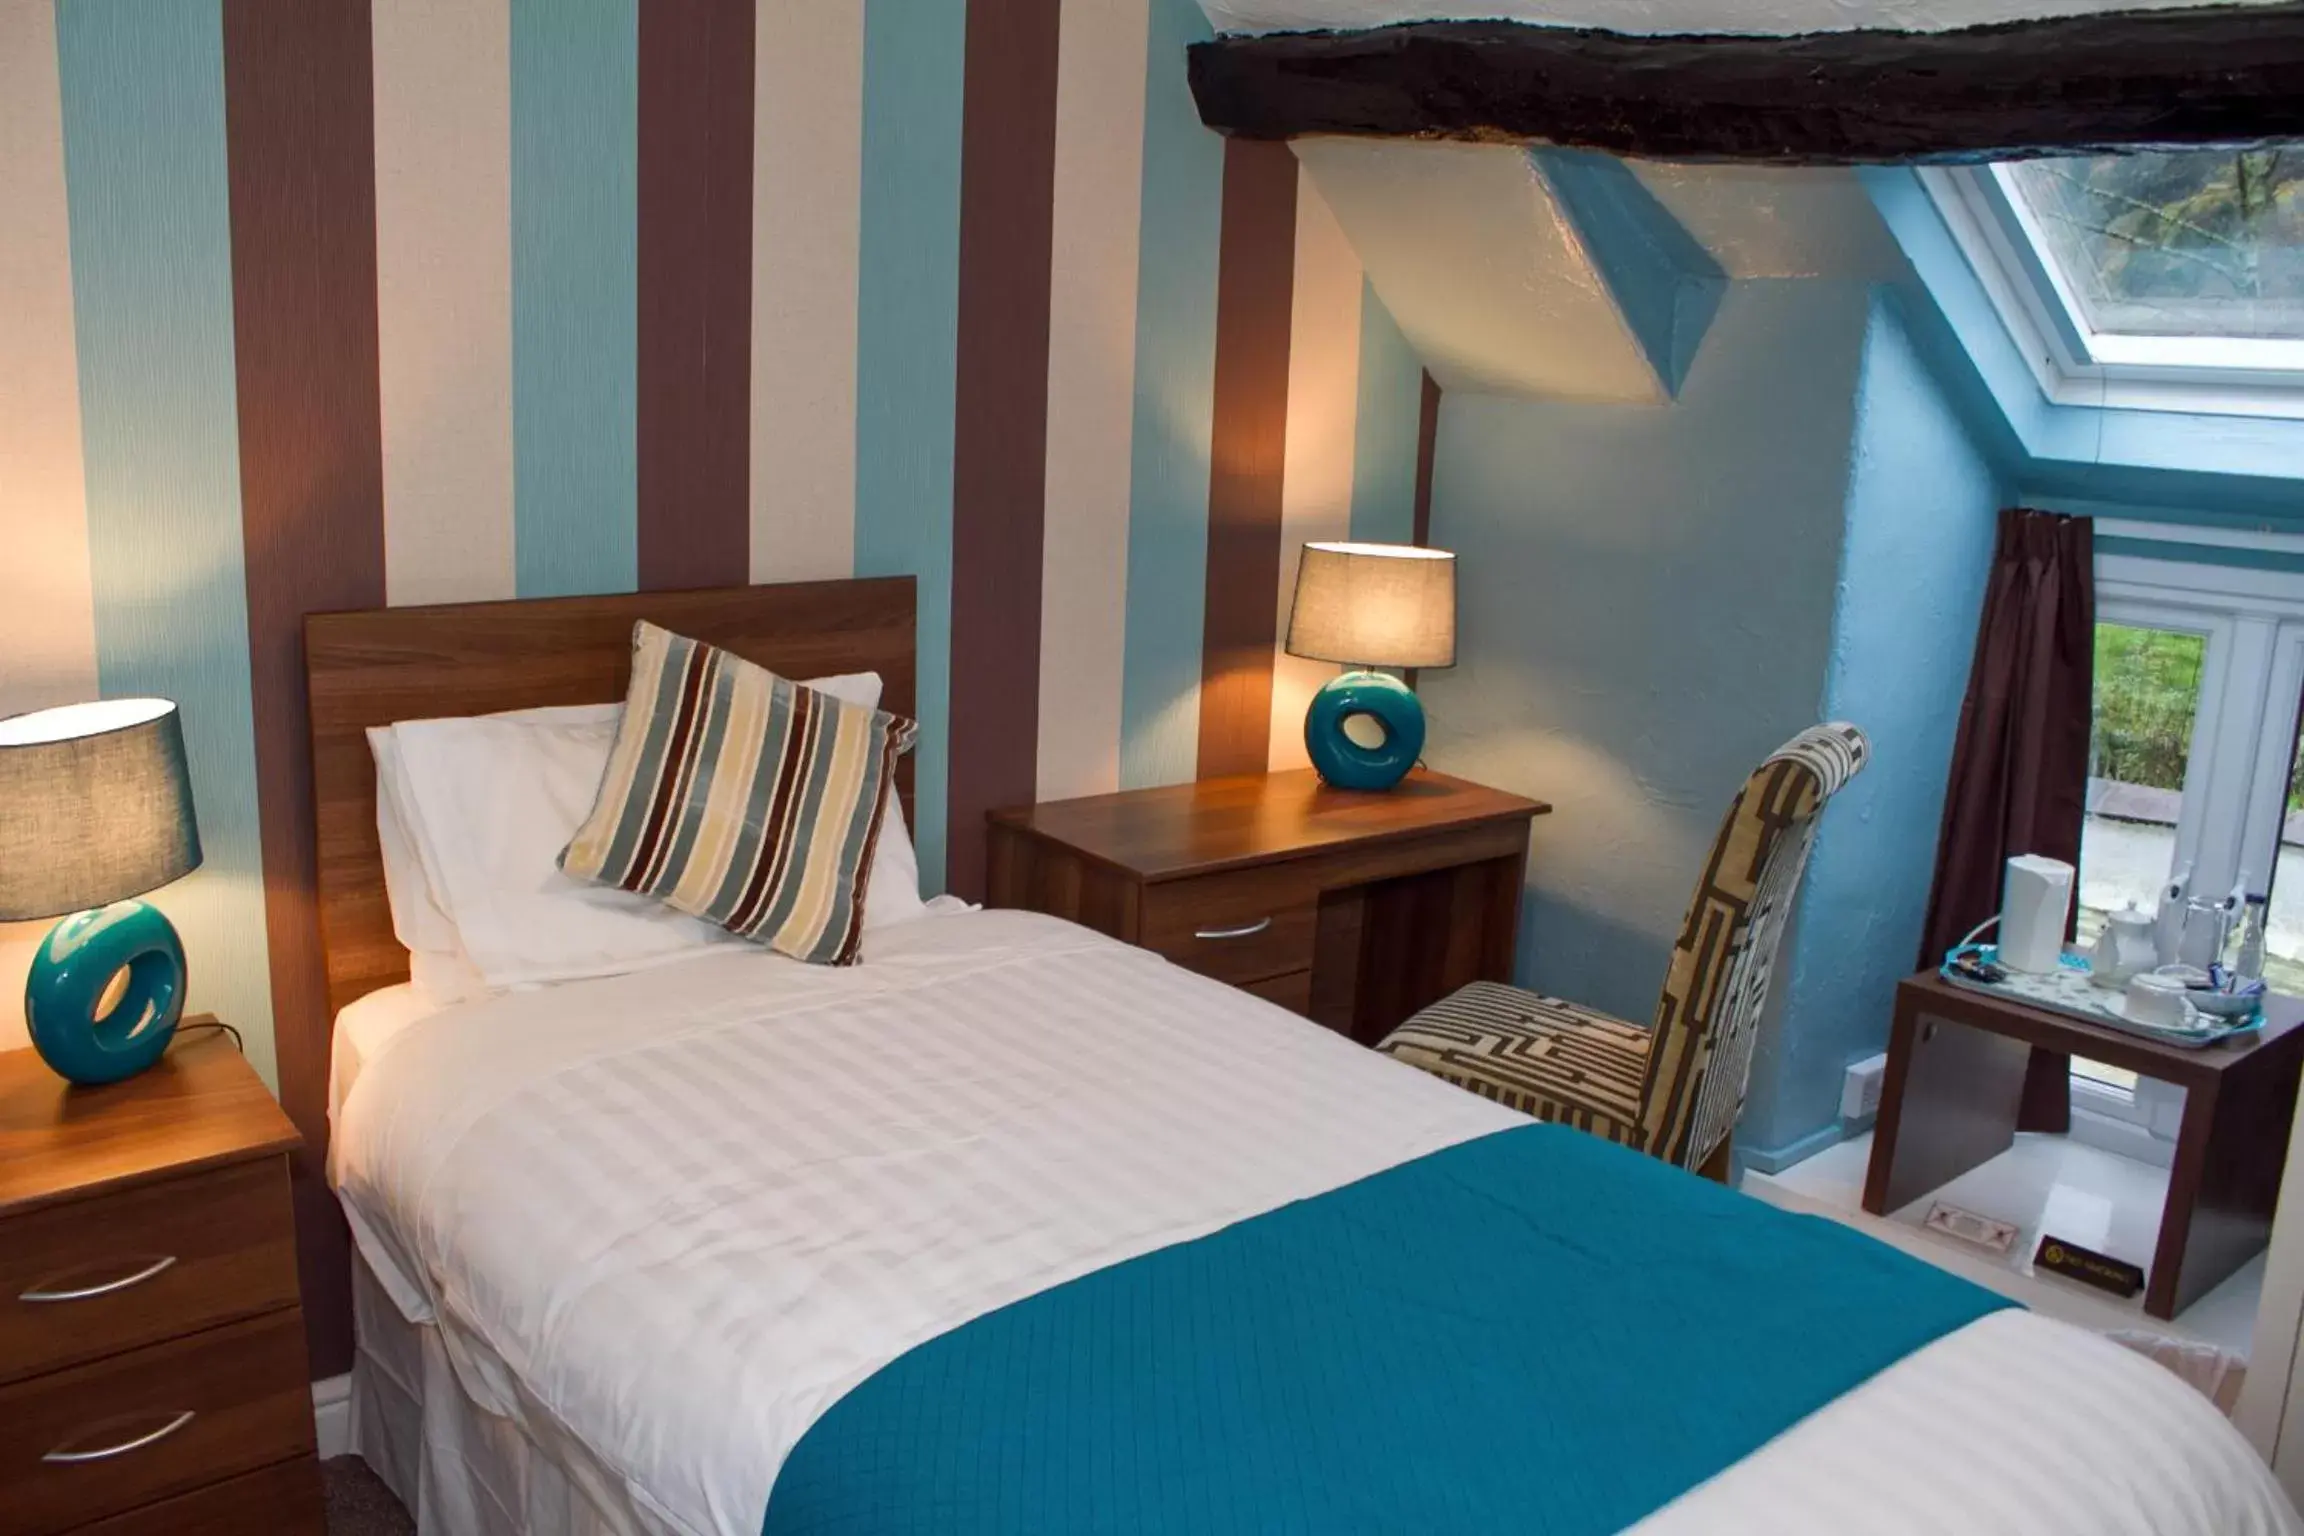 Bedroom, Bed in Gwesty Minffordd Hotel